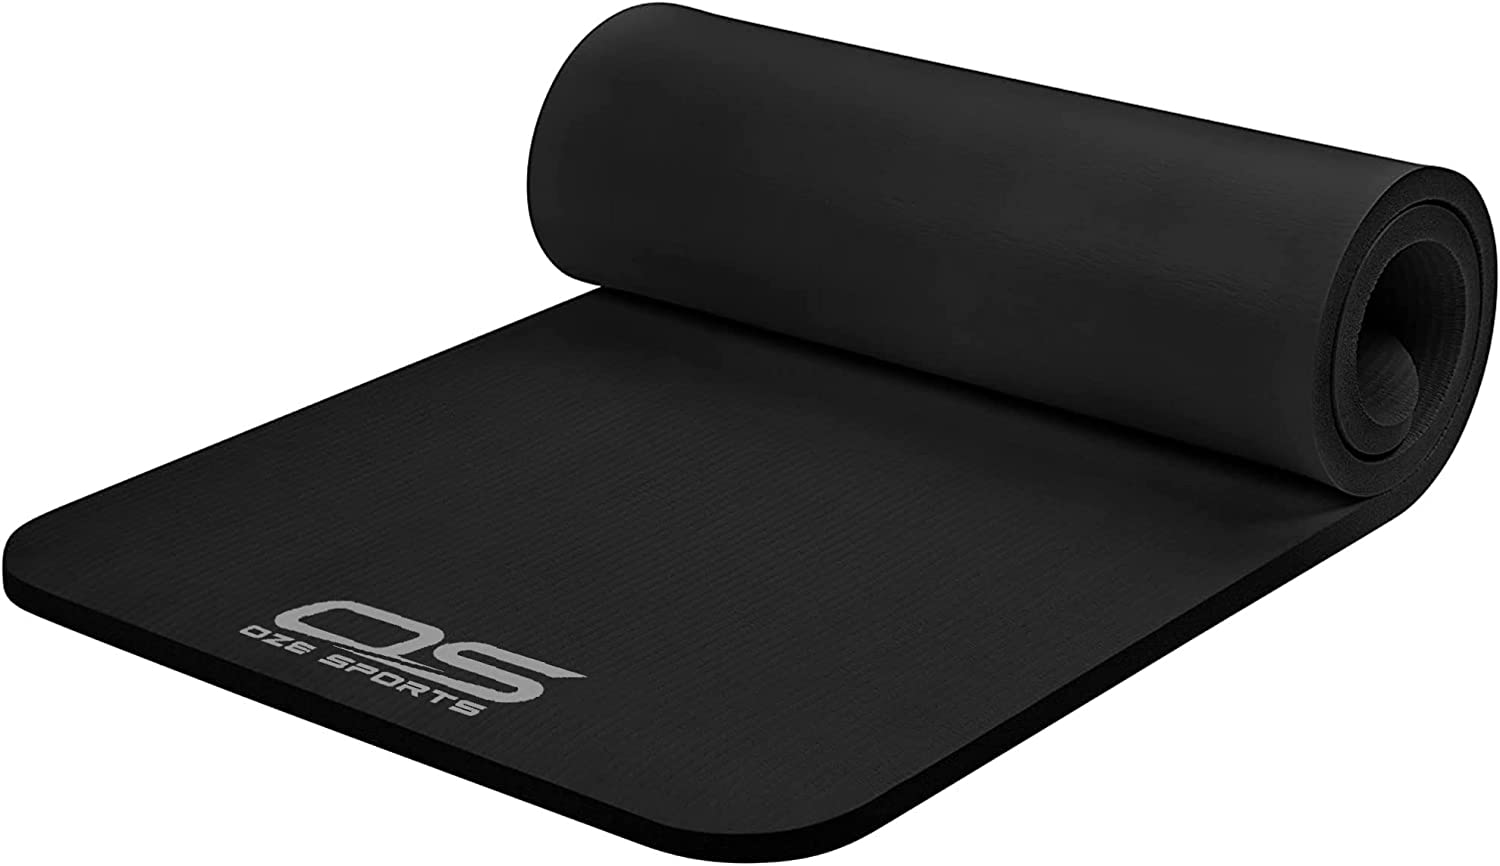 Yoga Mat Exercise NBR Fitness foam mat Extra Thick Non-Slip Large